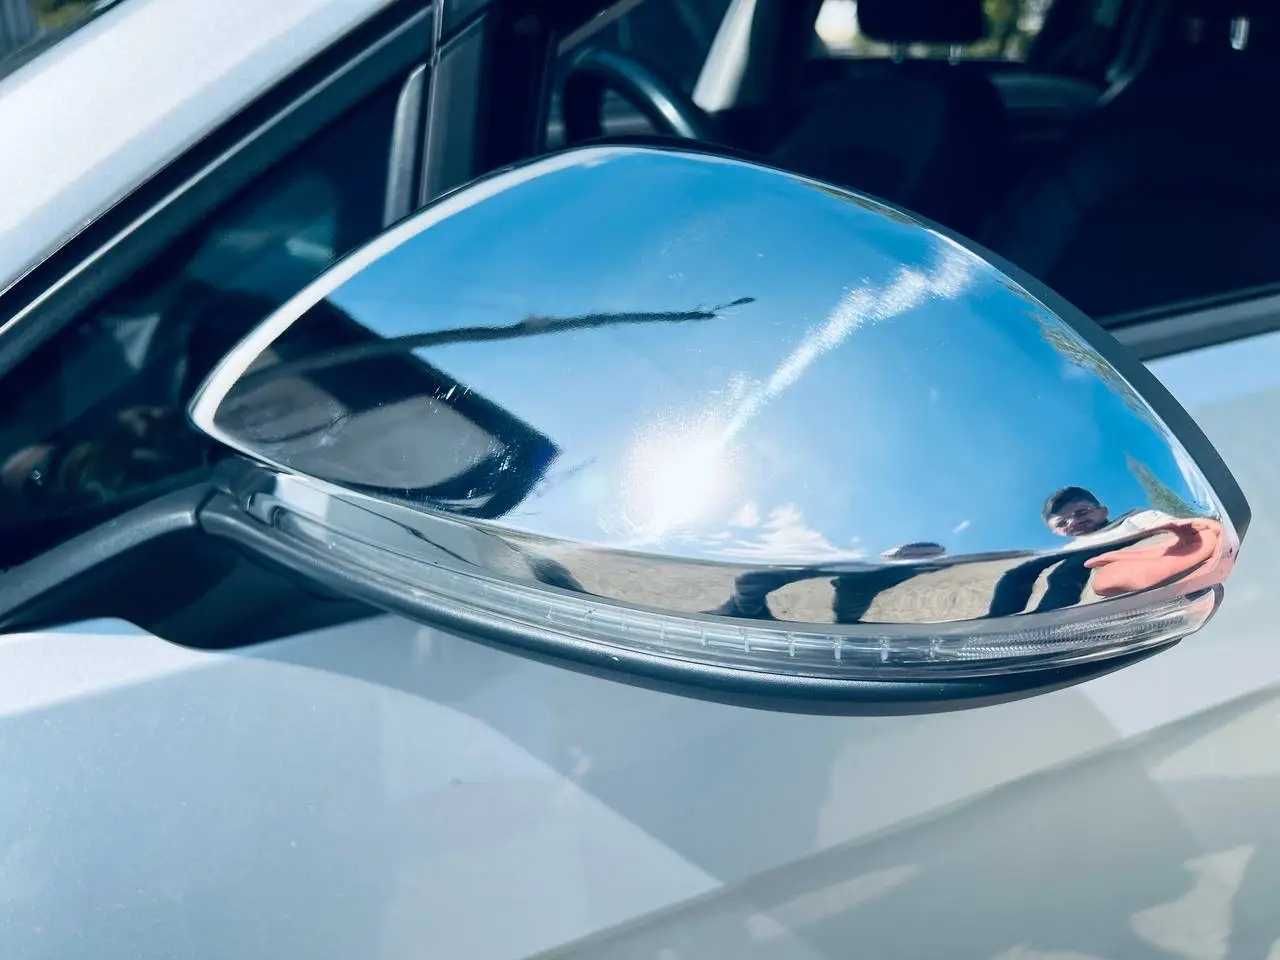 Накладки на зеркала (2 шт, СТАЛЬ) - Volkswagen Golf 7